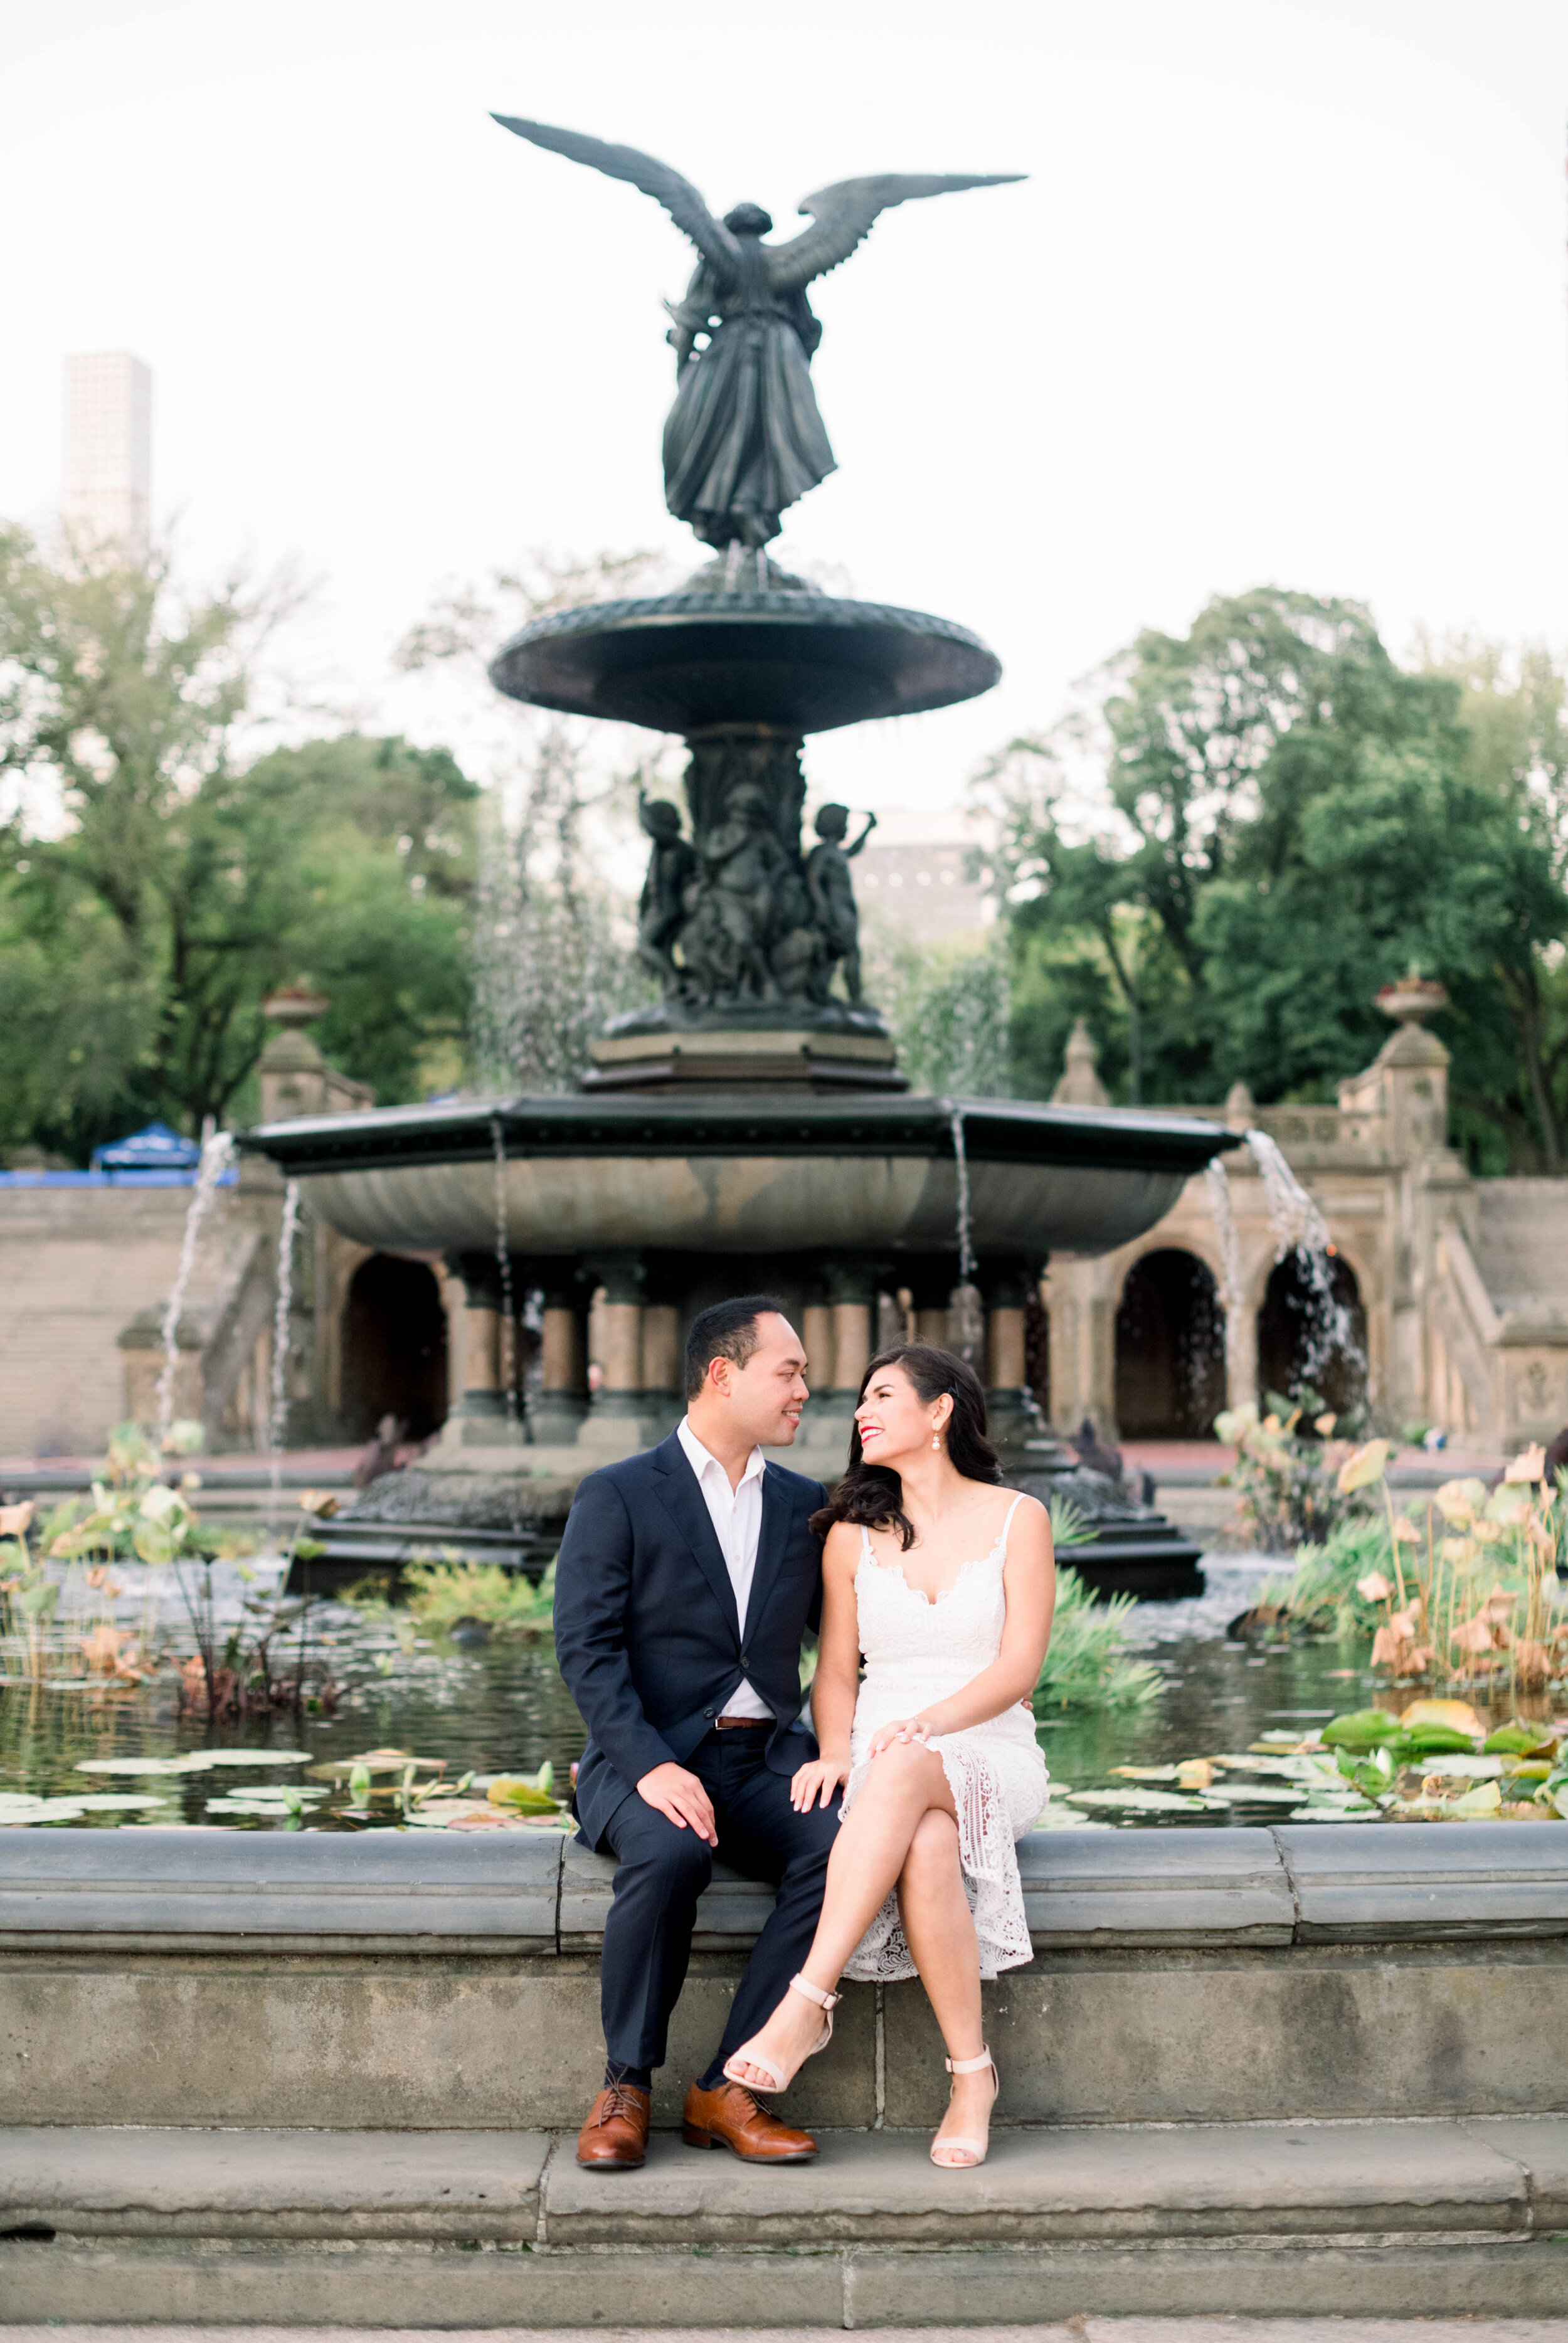 New York city+engagement+Bethesda Fountain+bethesda terrace+Manhattan+wedding+nyc+Central Park+lace dress+white bouquet+photo